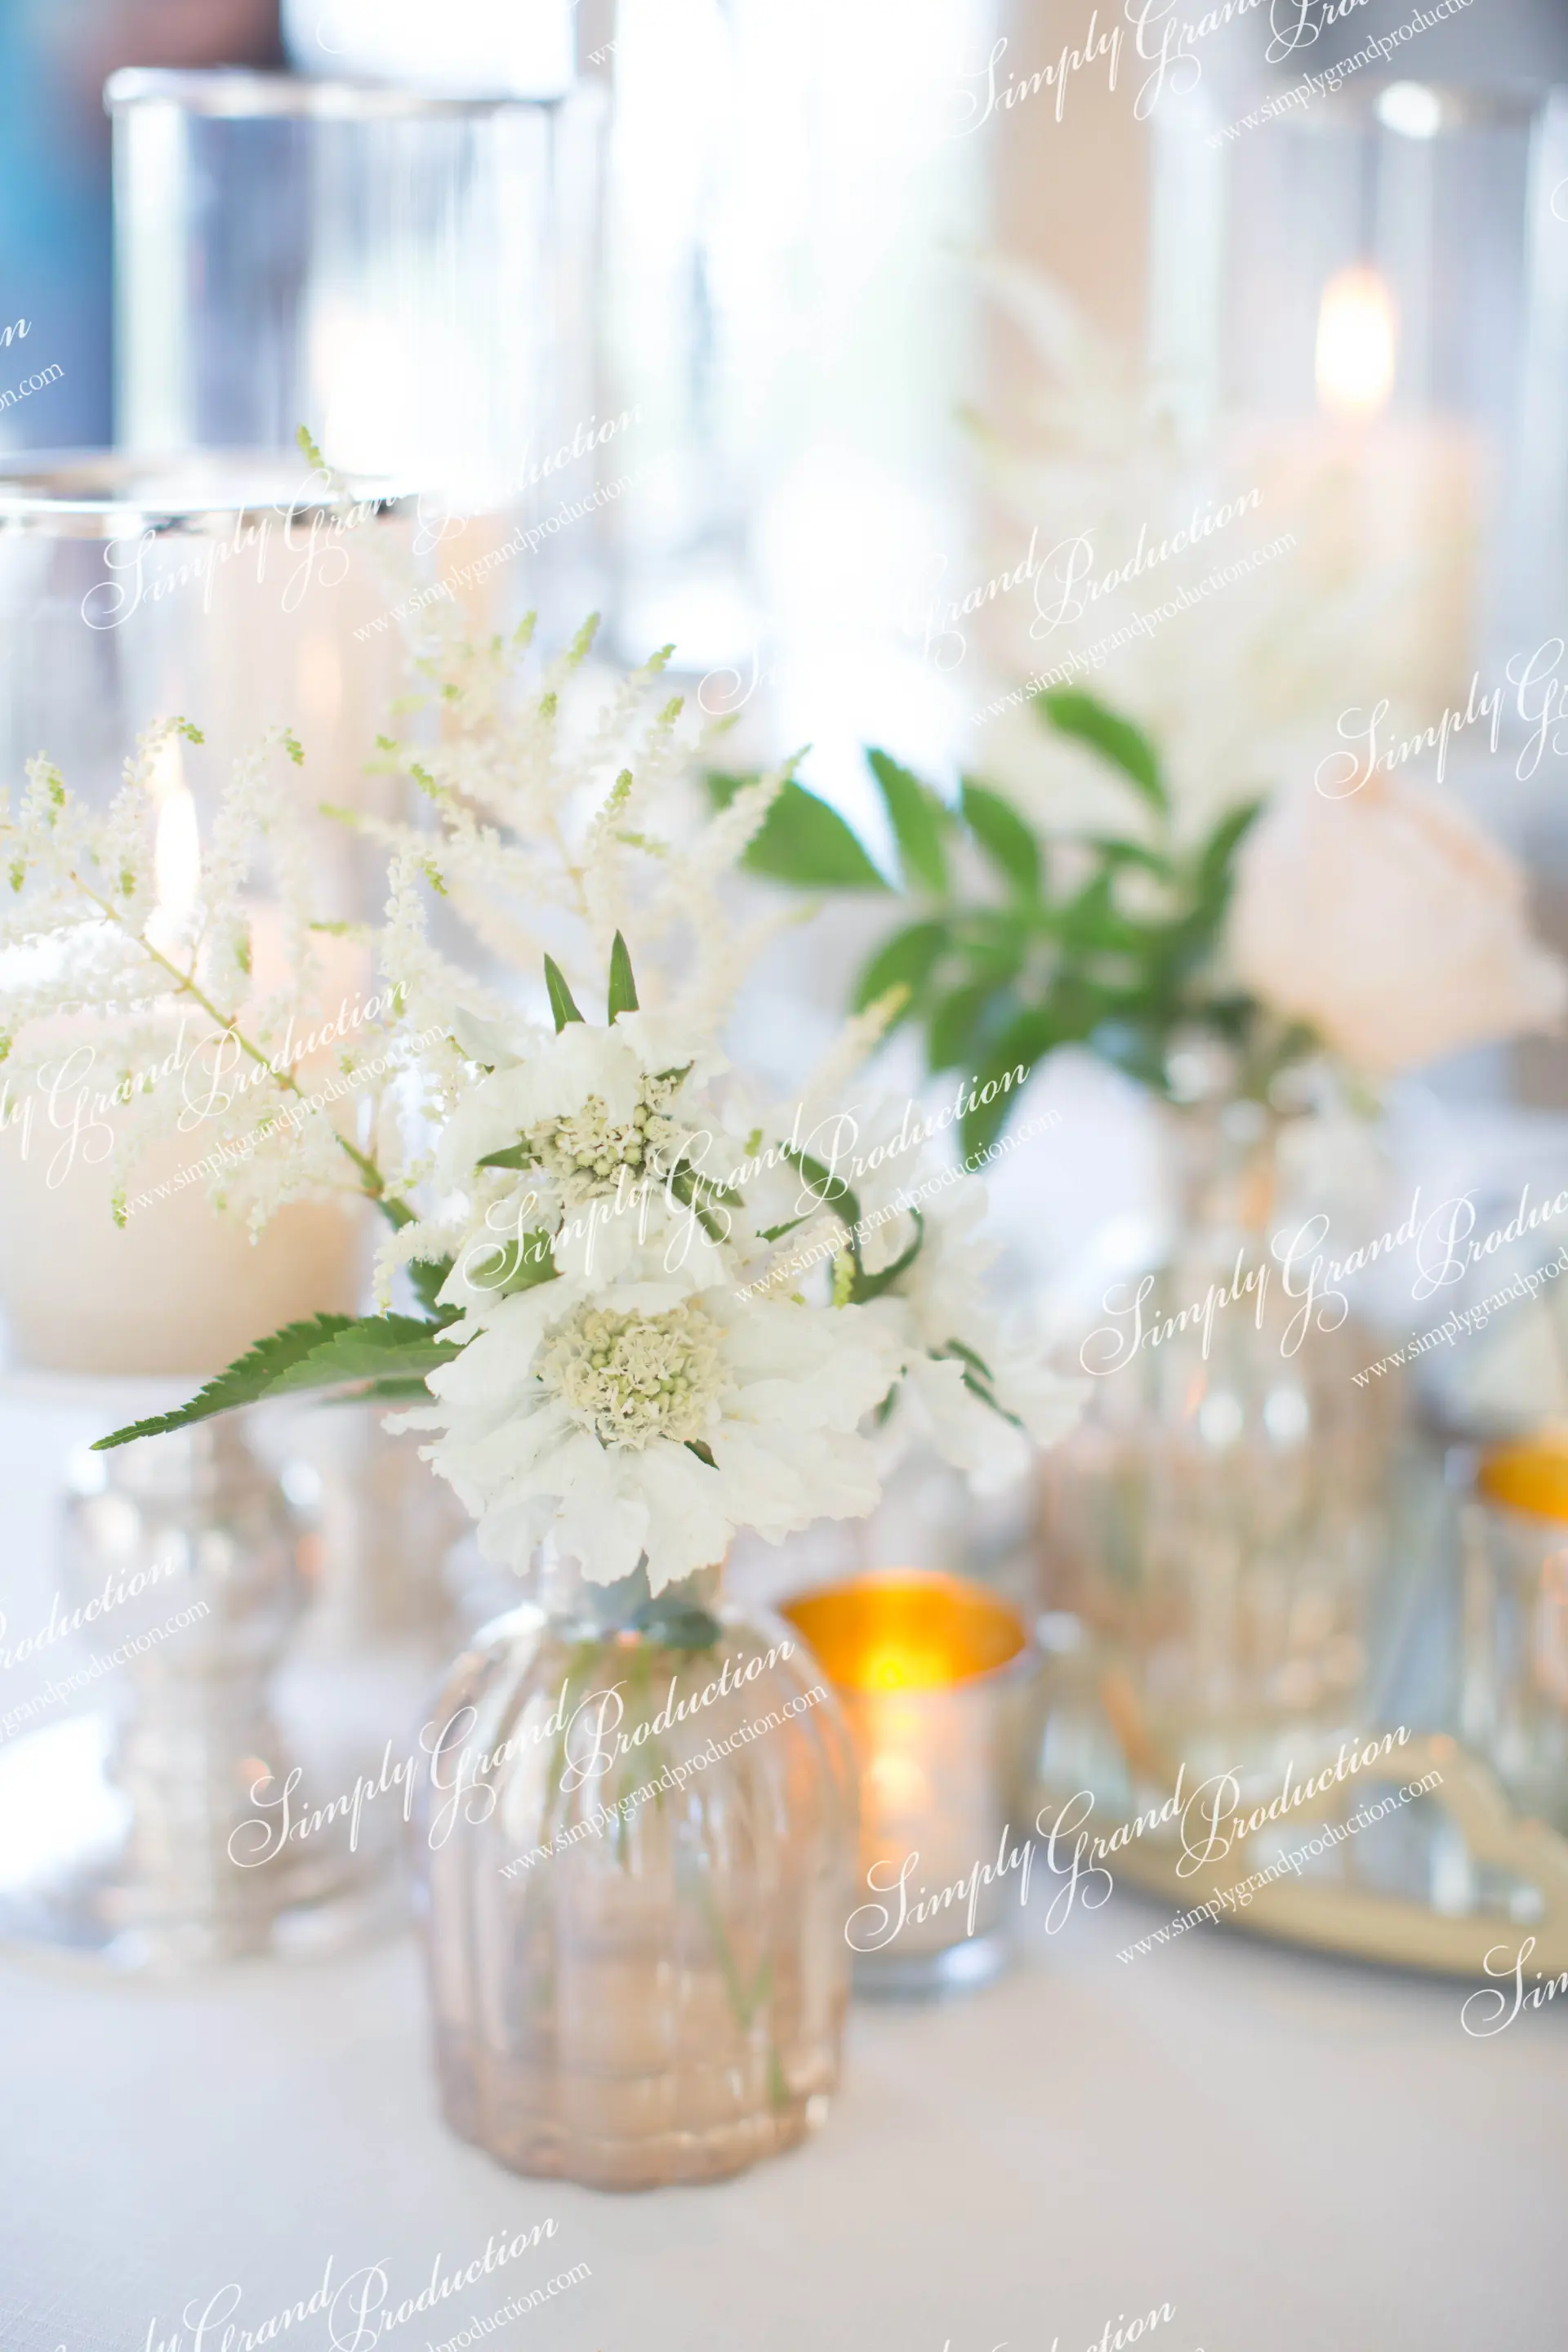 Simply_Grand_Production_Classic_Elegant_wedding_decoration_reception_white_flower_Four_Seasons_2_14a